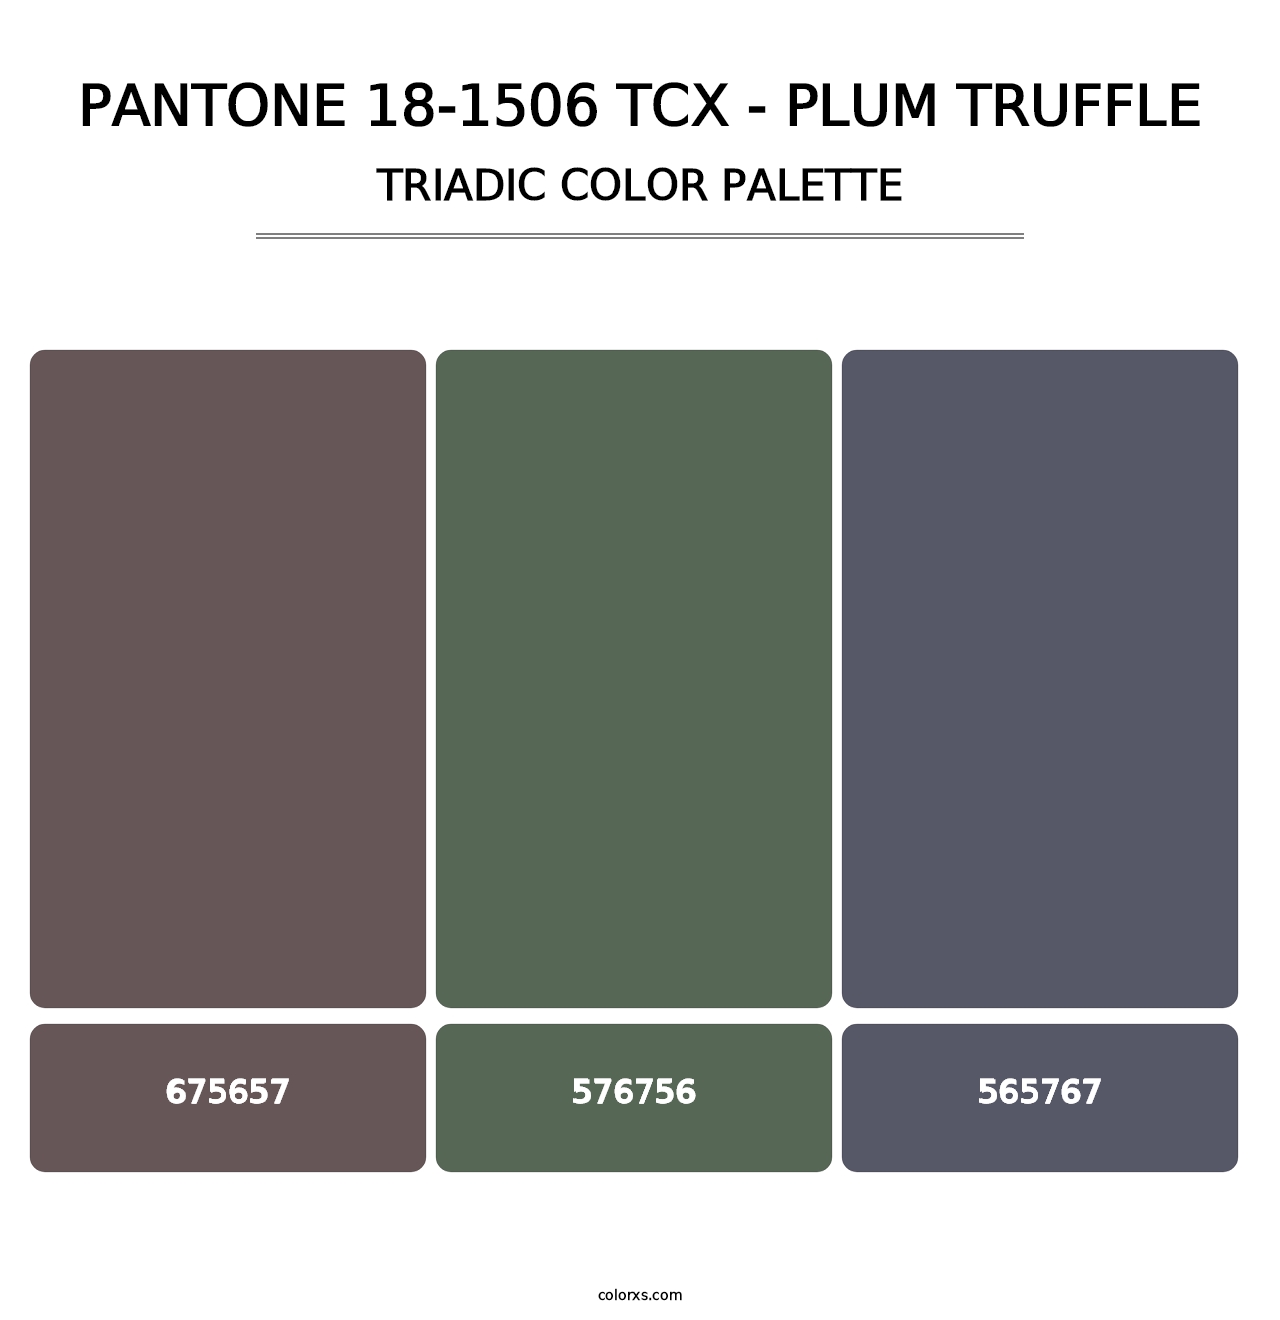 PANTONE 18-1506 TCX - Plum Truffle - Triadic Color Palette